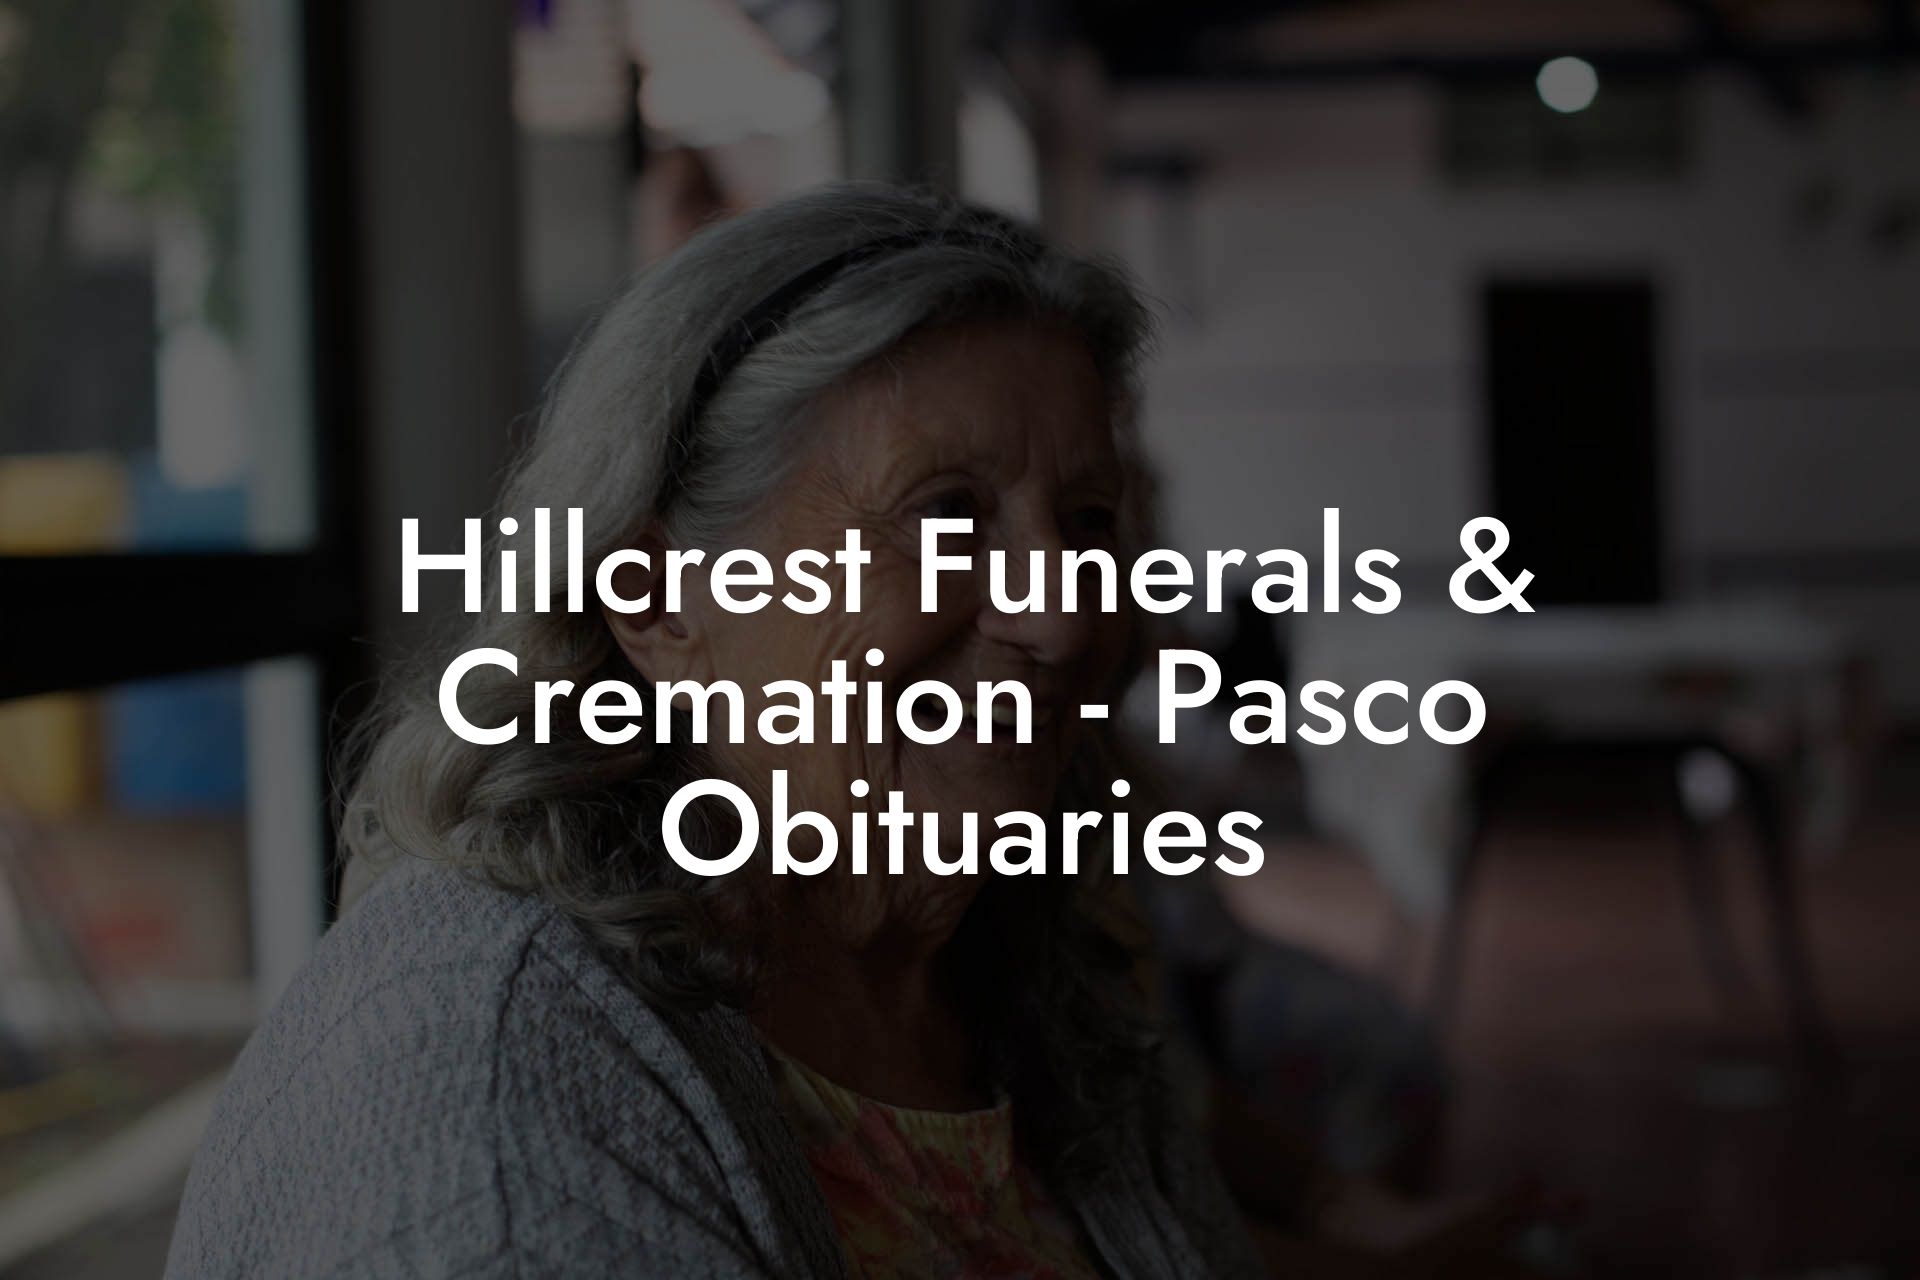 Hillcrest Funerals & Cremation - Pasco Obituaries